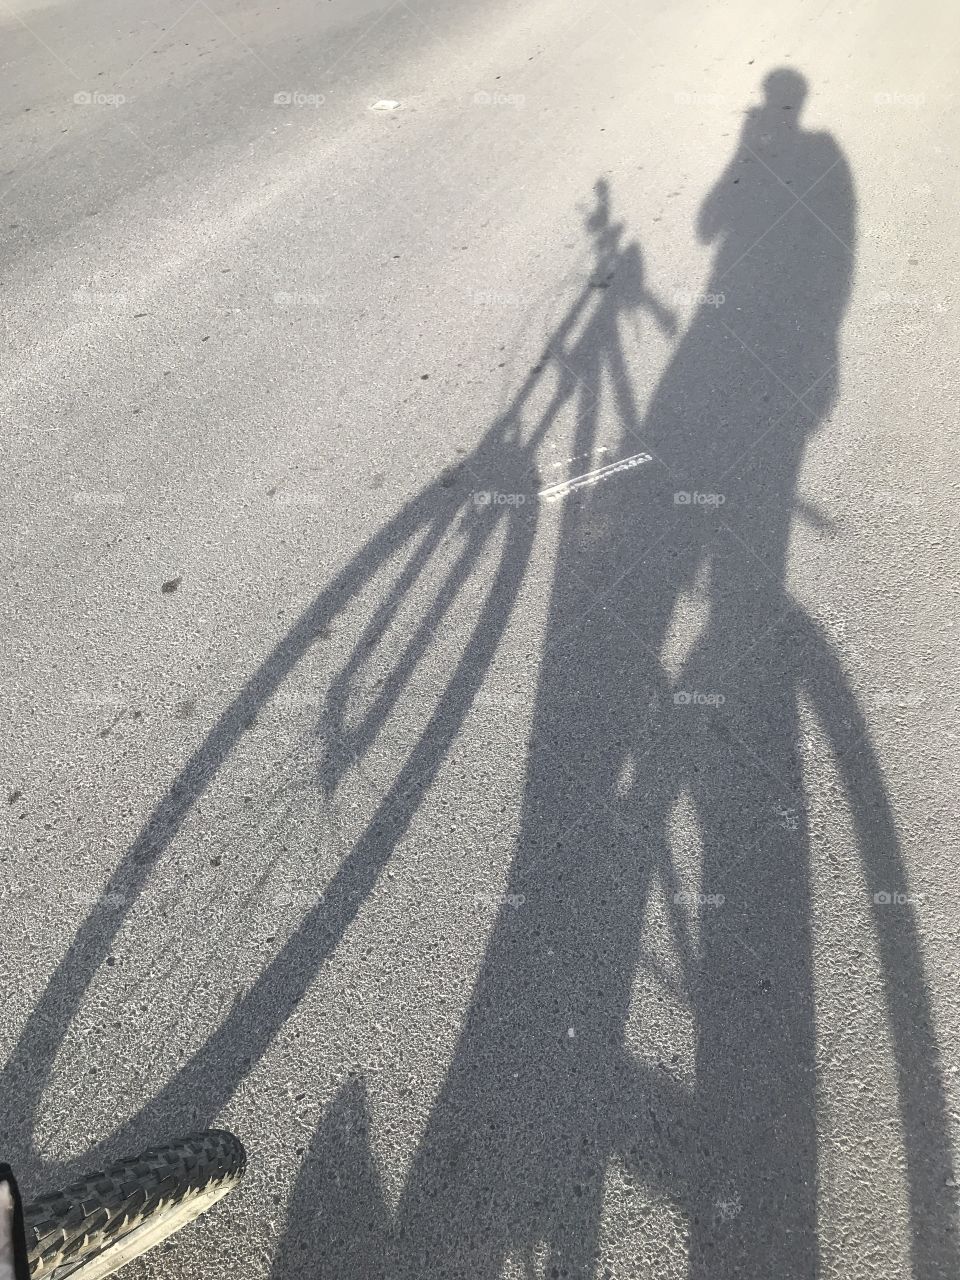 Bike shadow on asphalt street 